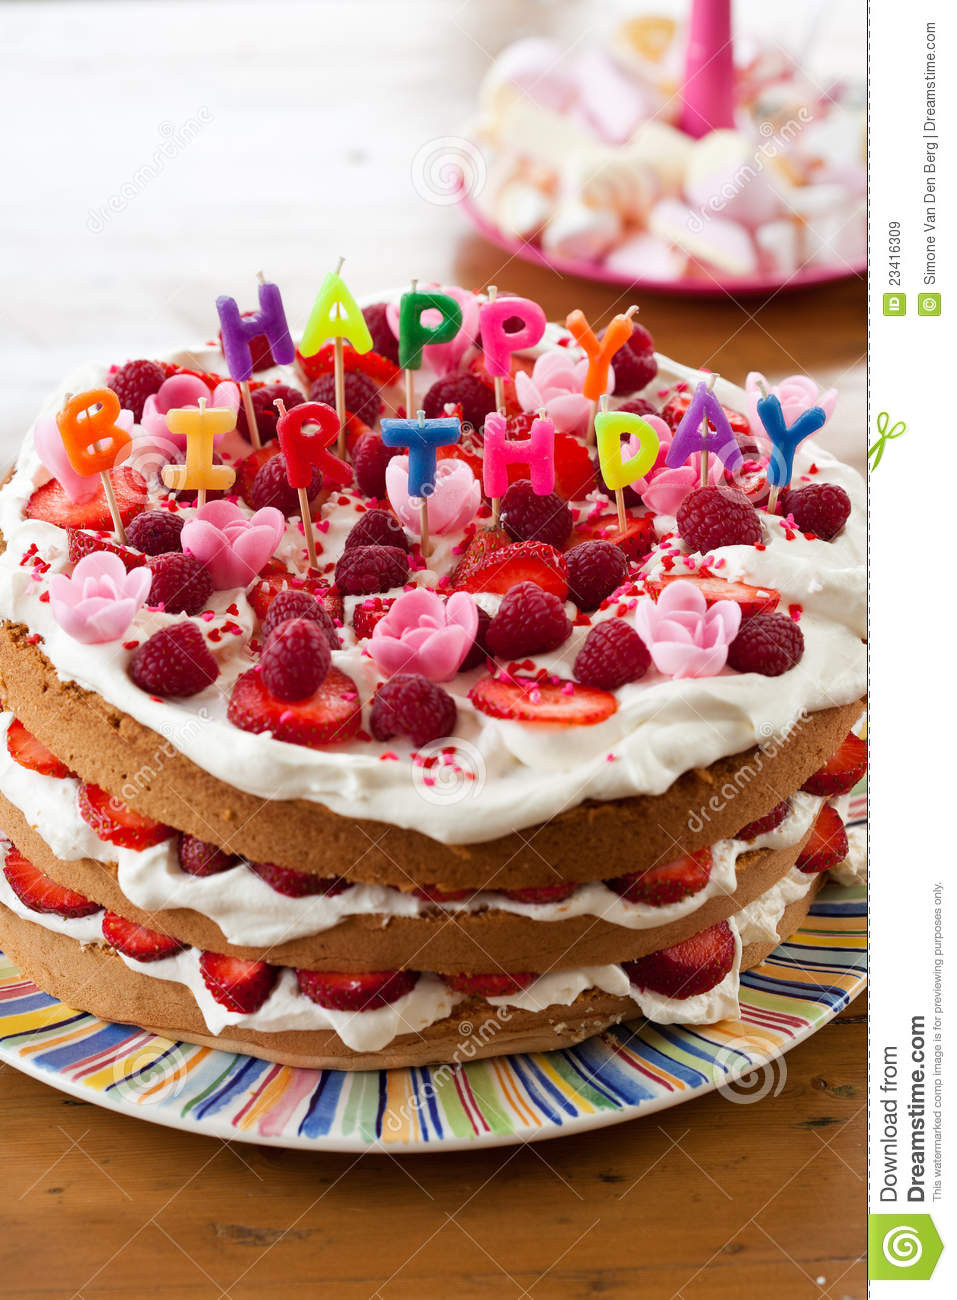 Happy Birthday Cake Pictures
 Happy Birthday Cake Royalty Free Stock Image